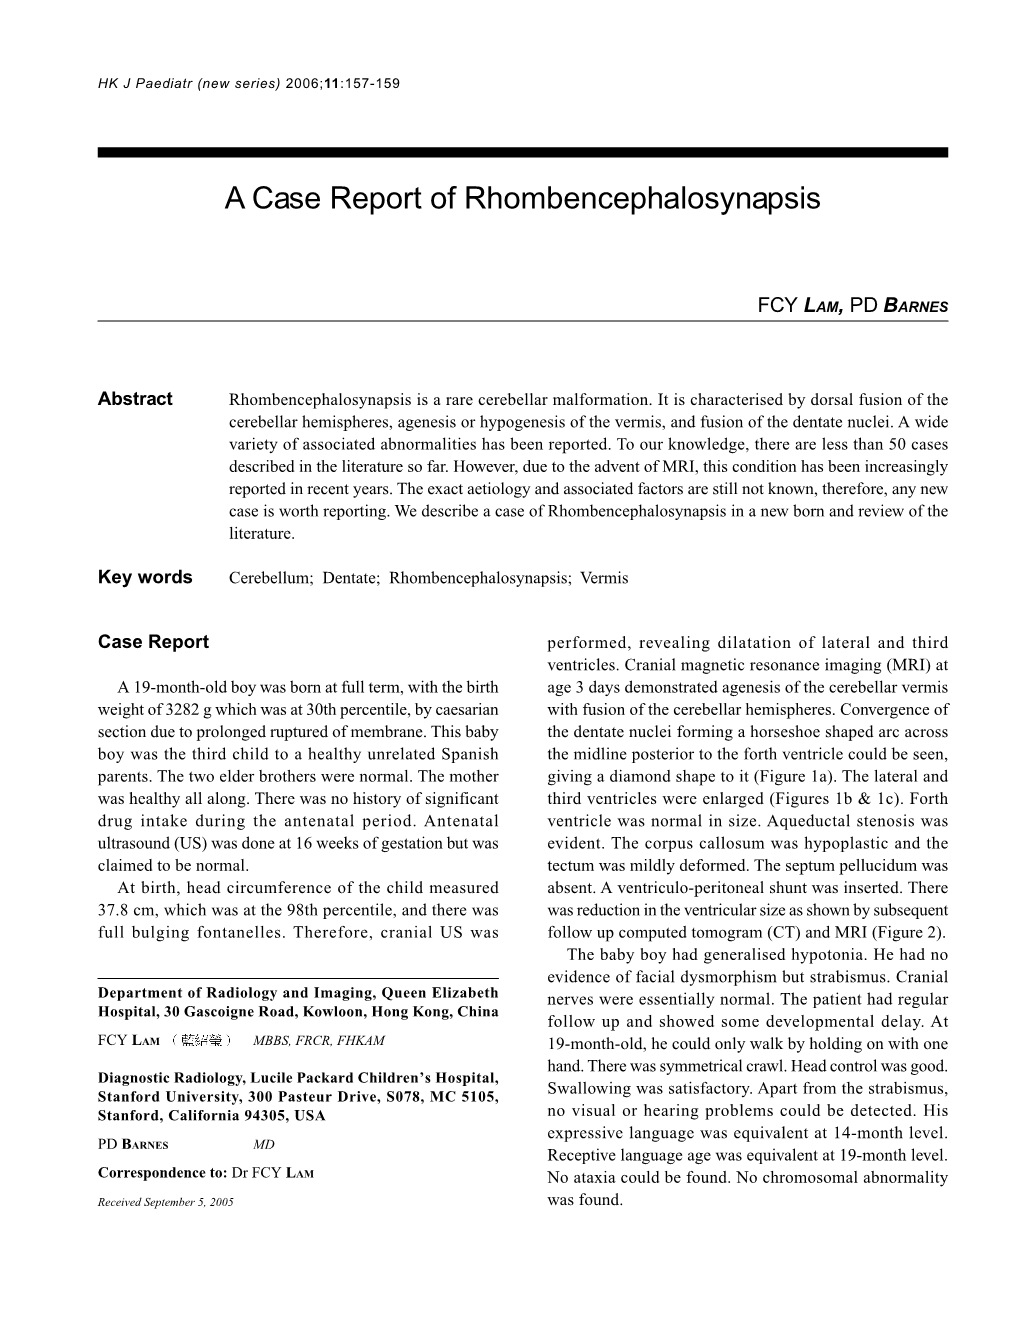 A Case Report of Rhombencephalosynapsis